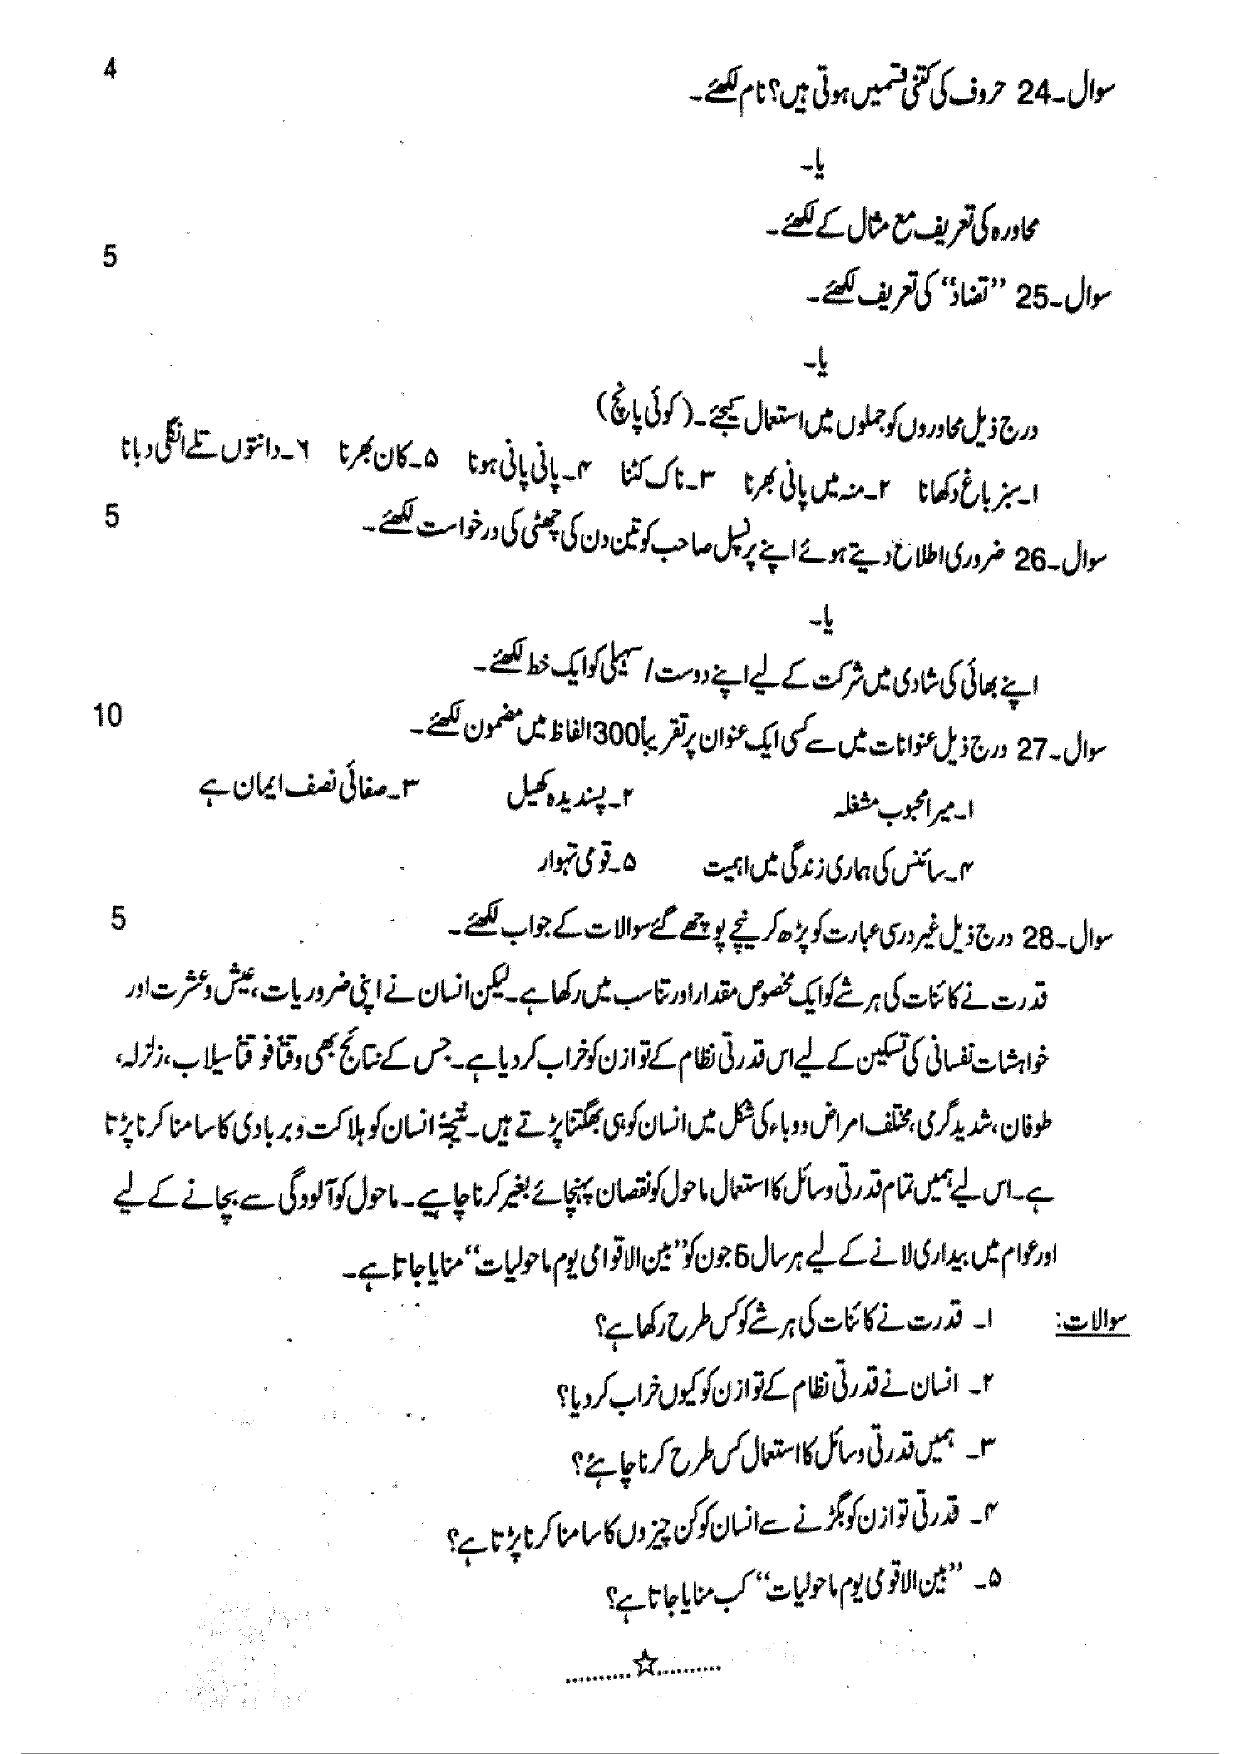 MP Board Class 12 Urdu 2019 Question Paper - Page 6